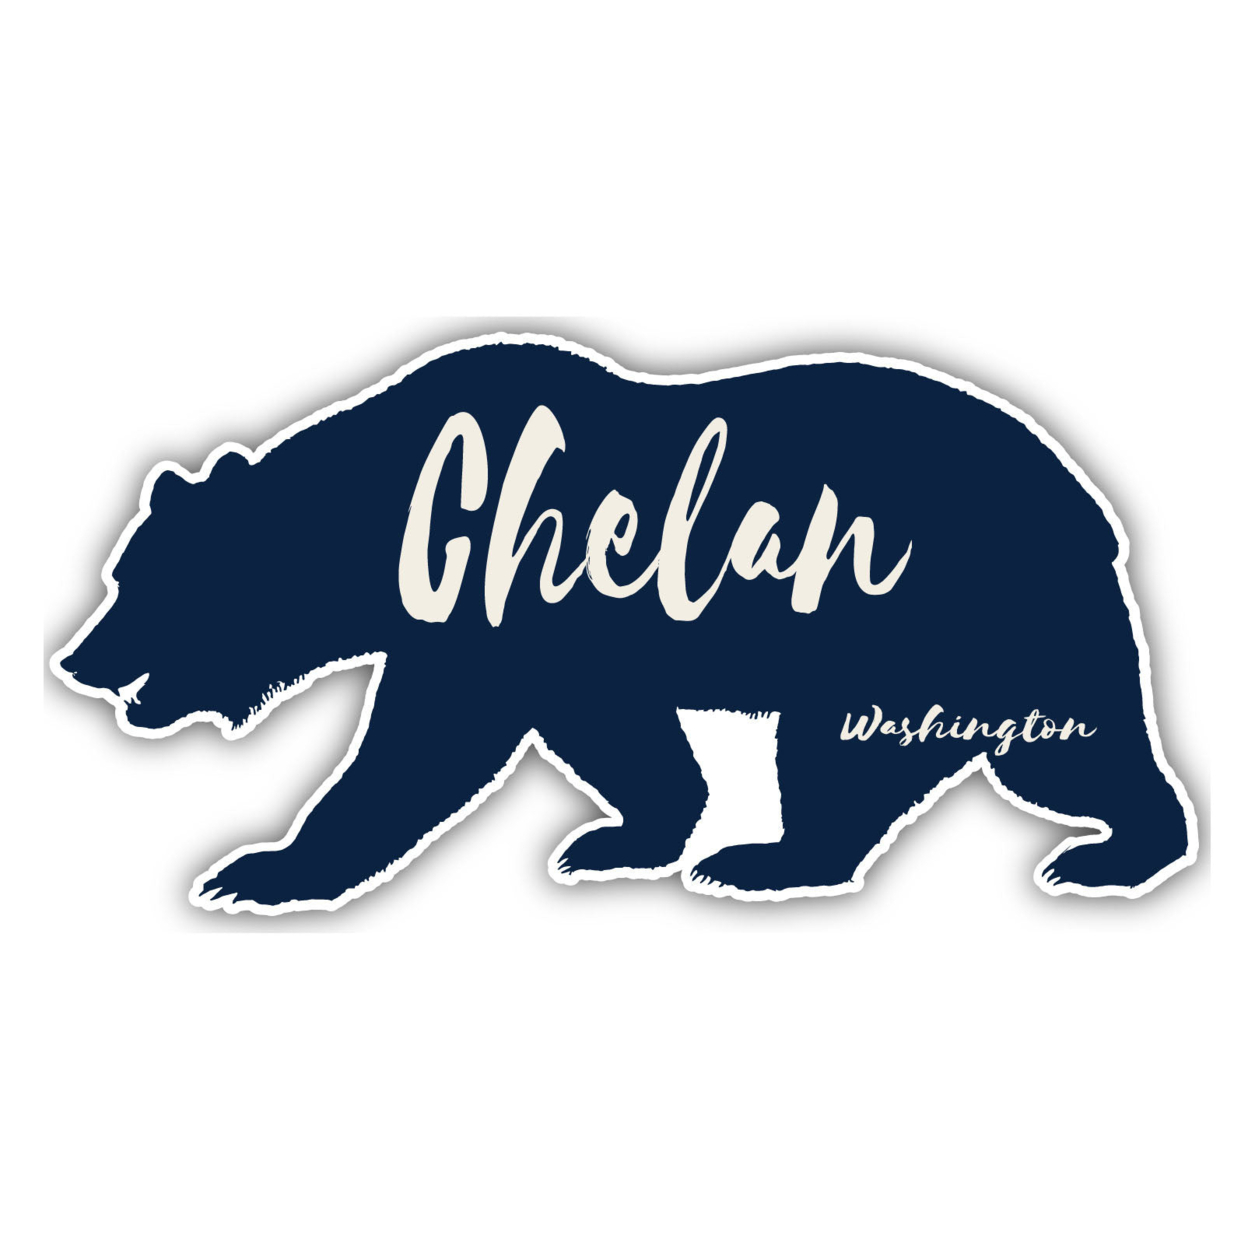 Chelan Washington Souvenir Decorative Stickers (Choose Theme And Size) - 4-Pack, 2-Inch, Tent